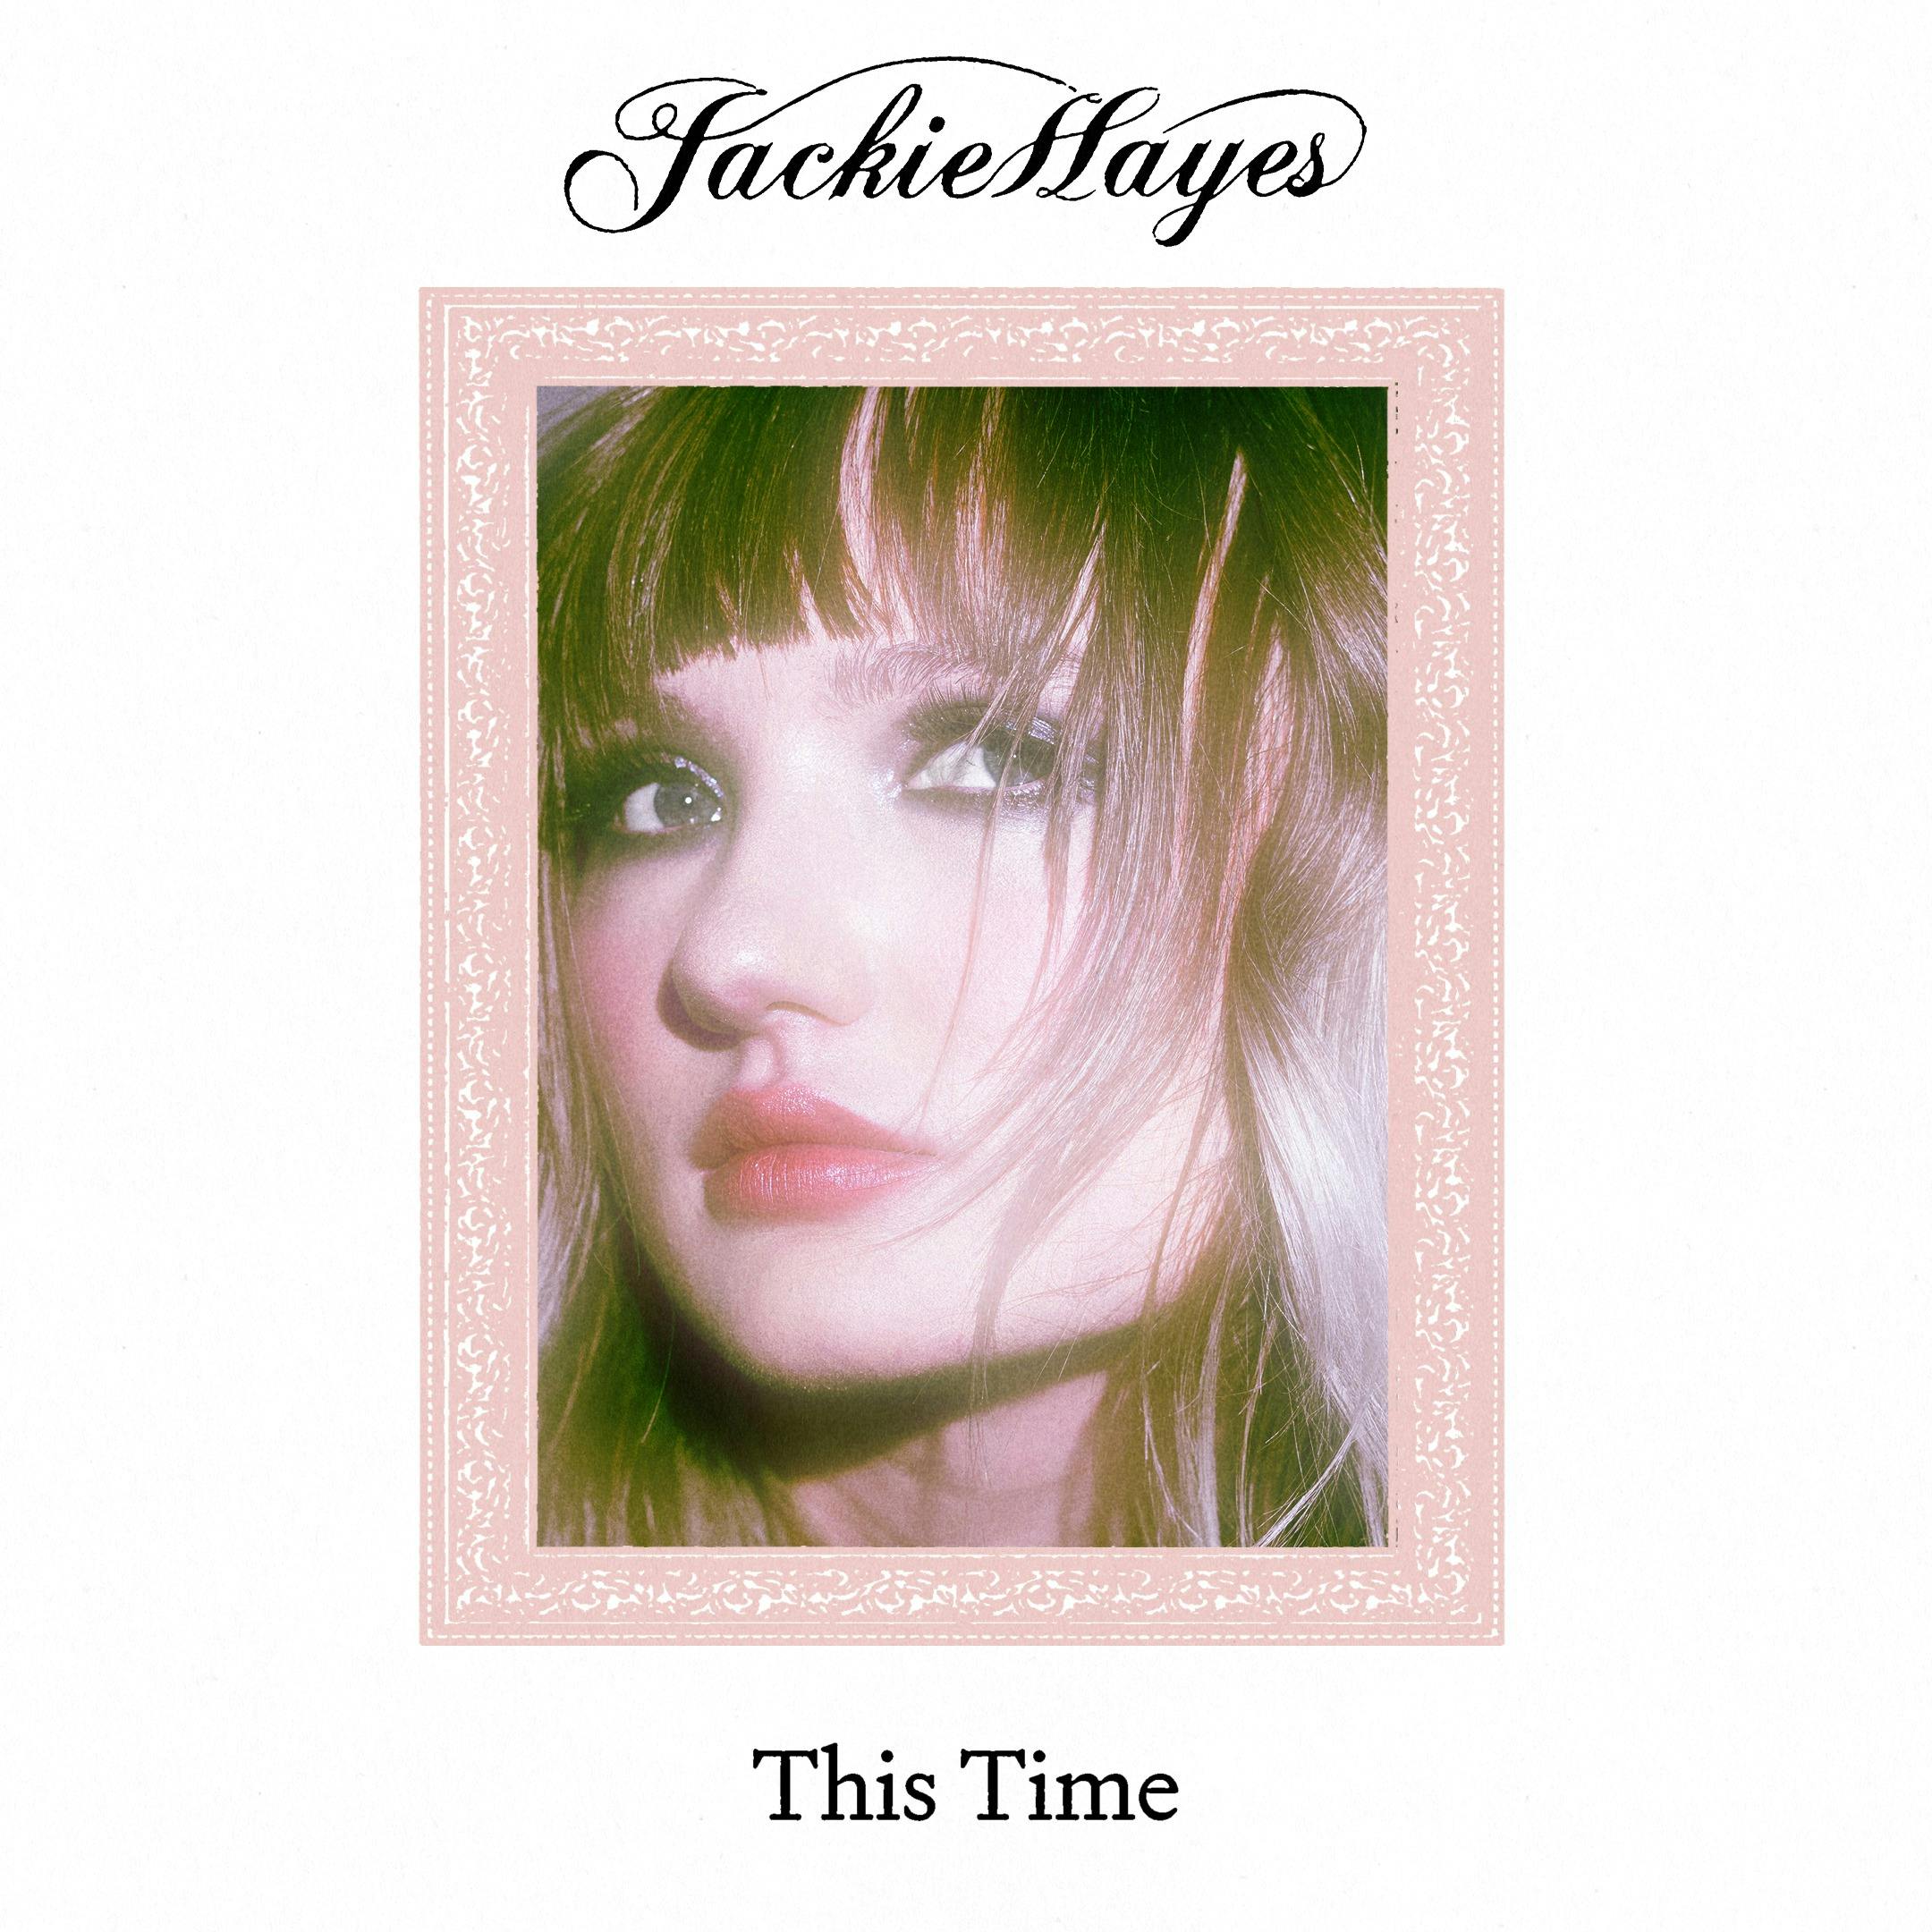 Jackie Hayes - This Time